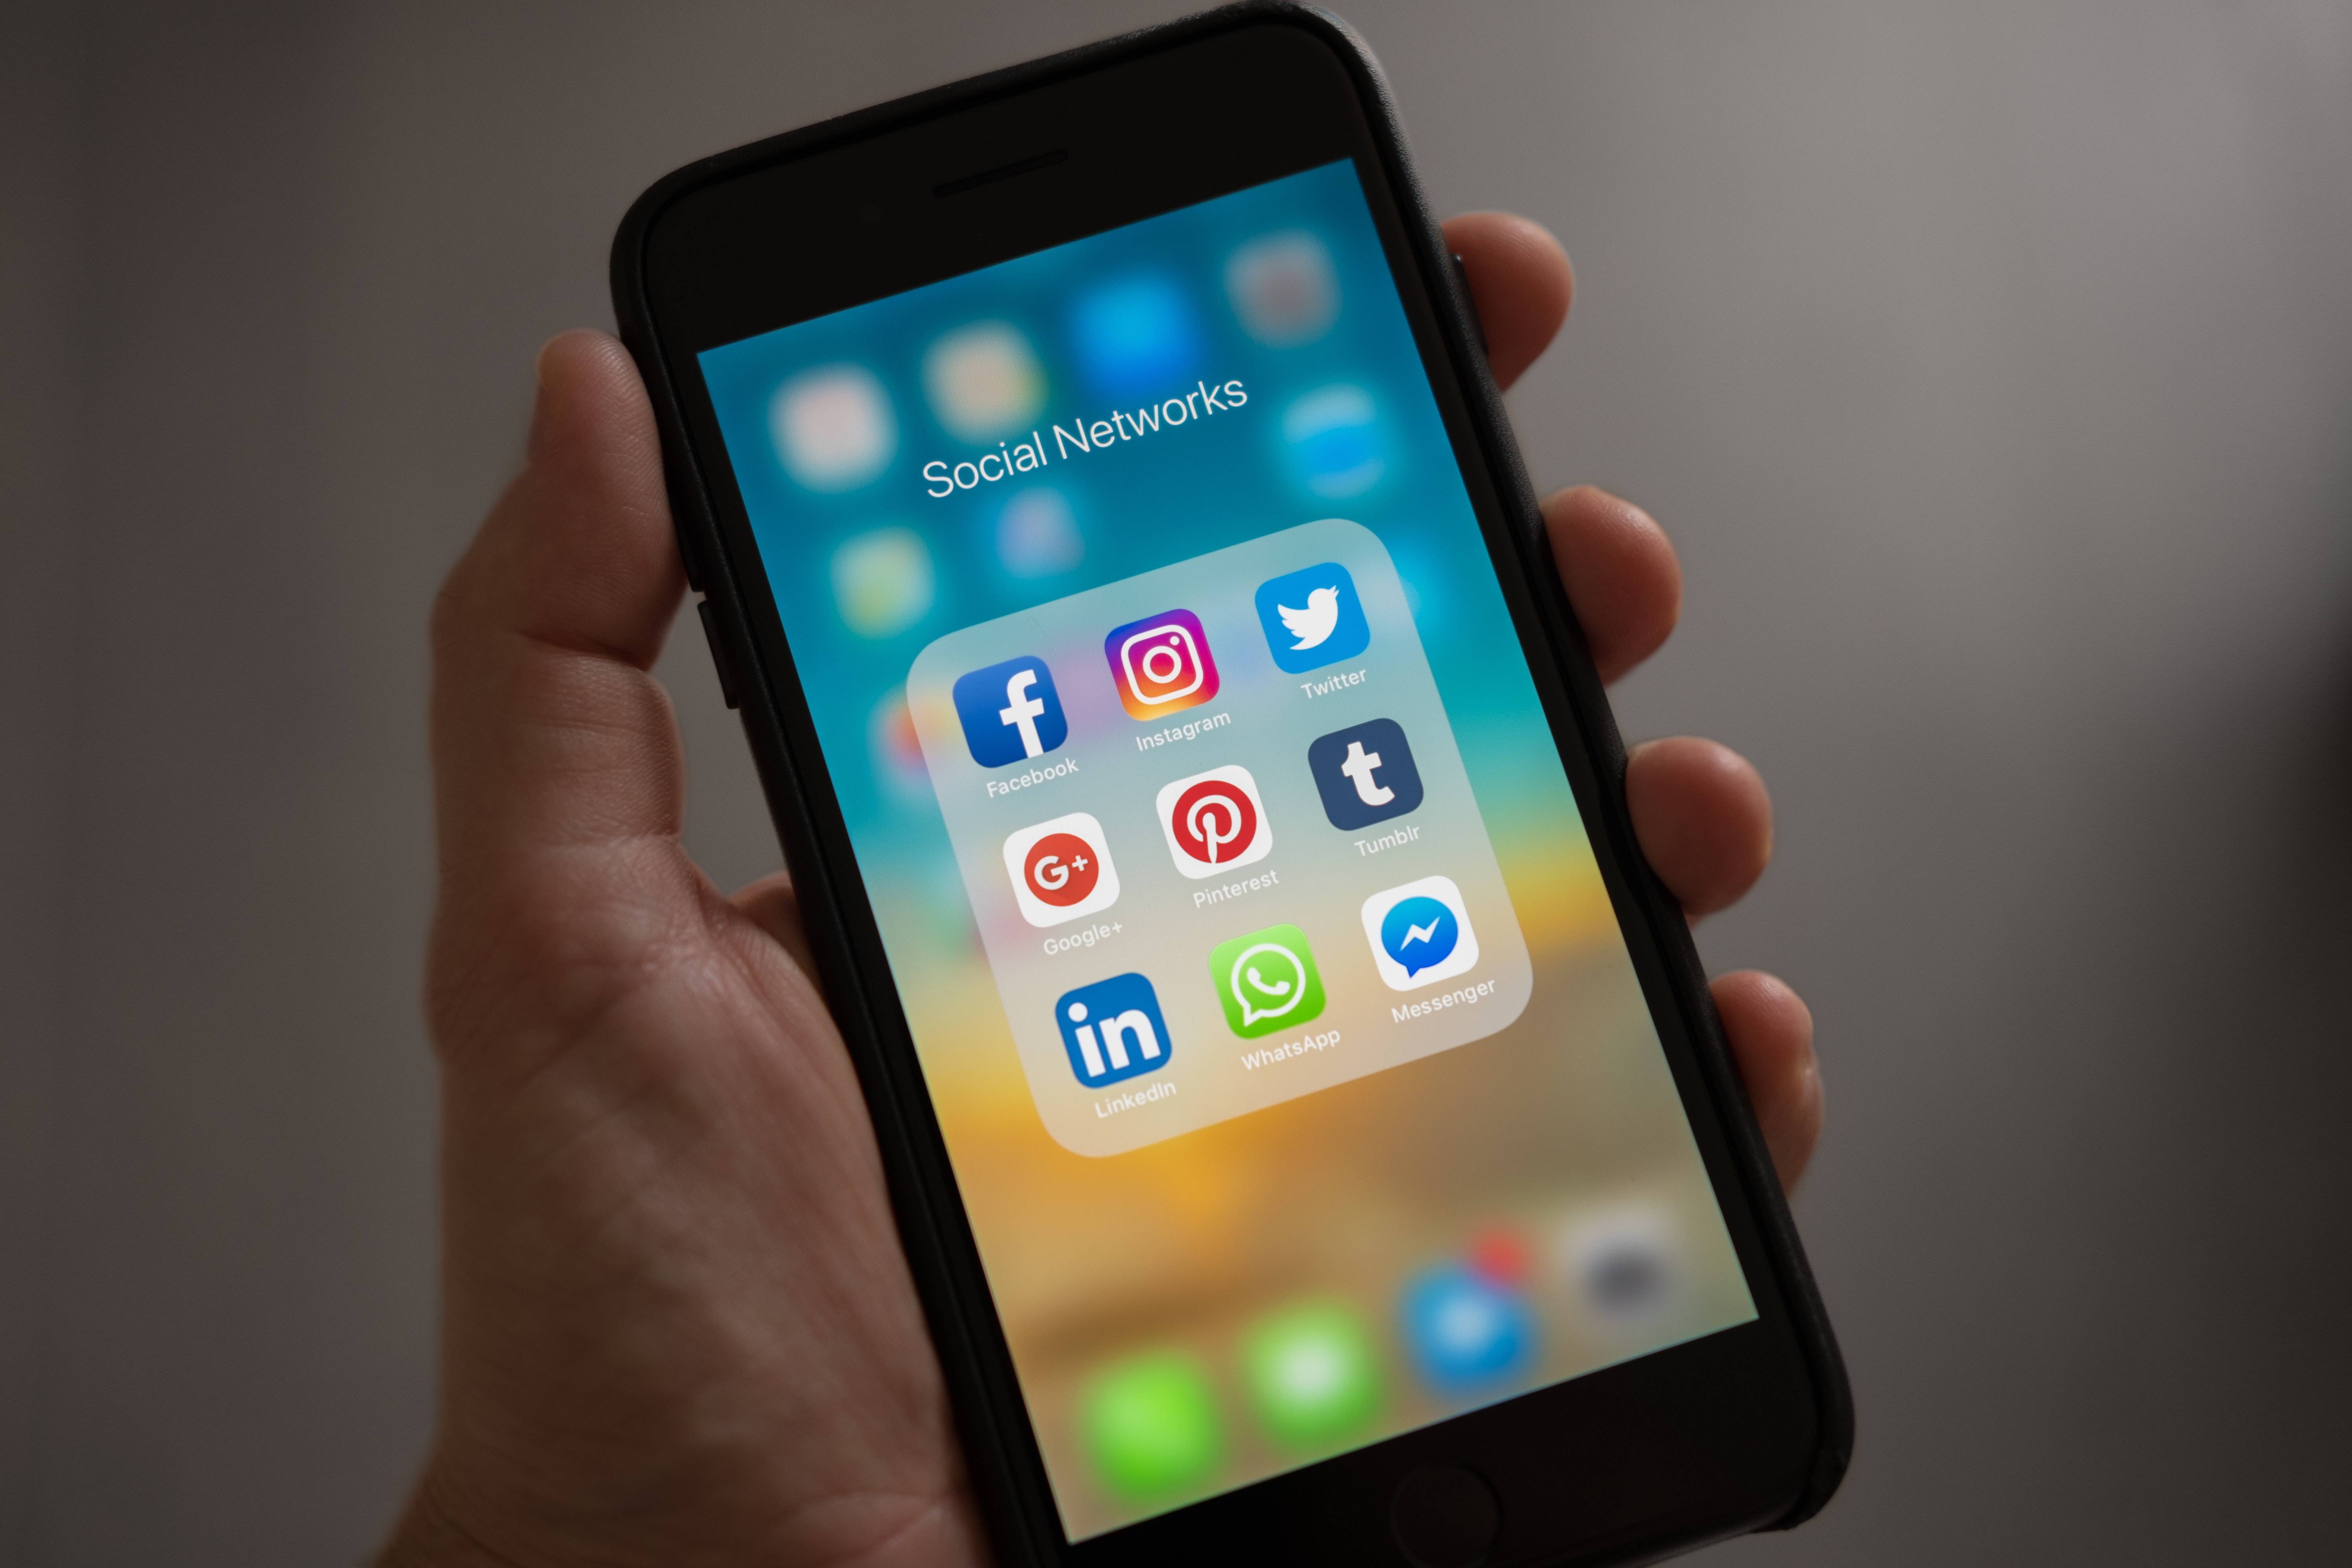 Social Media Marketing Mistakes to Avoid In 2022